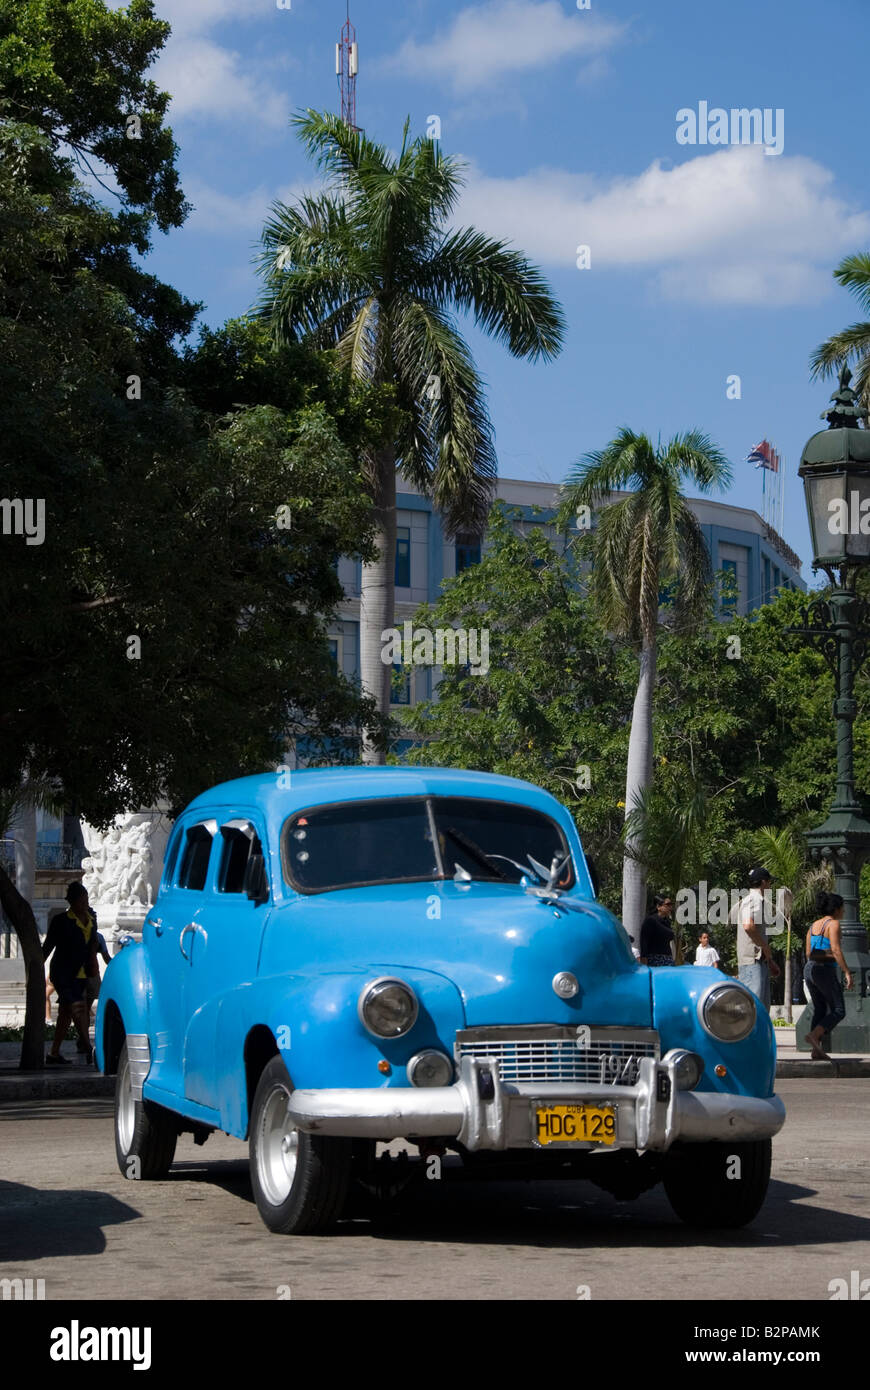 Old vintage American car at Parque Central in Habana Vieja Havana Cuba Stock Photo